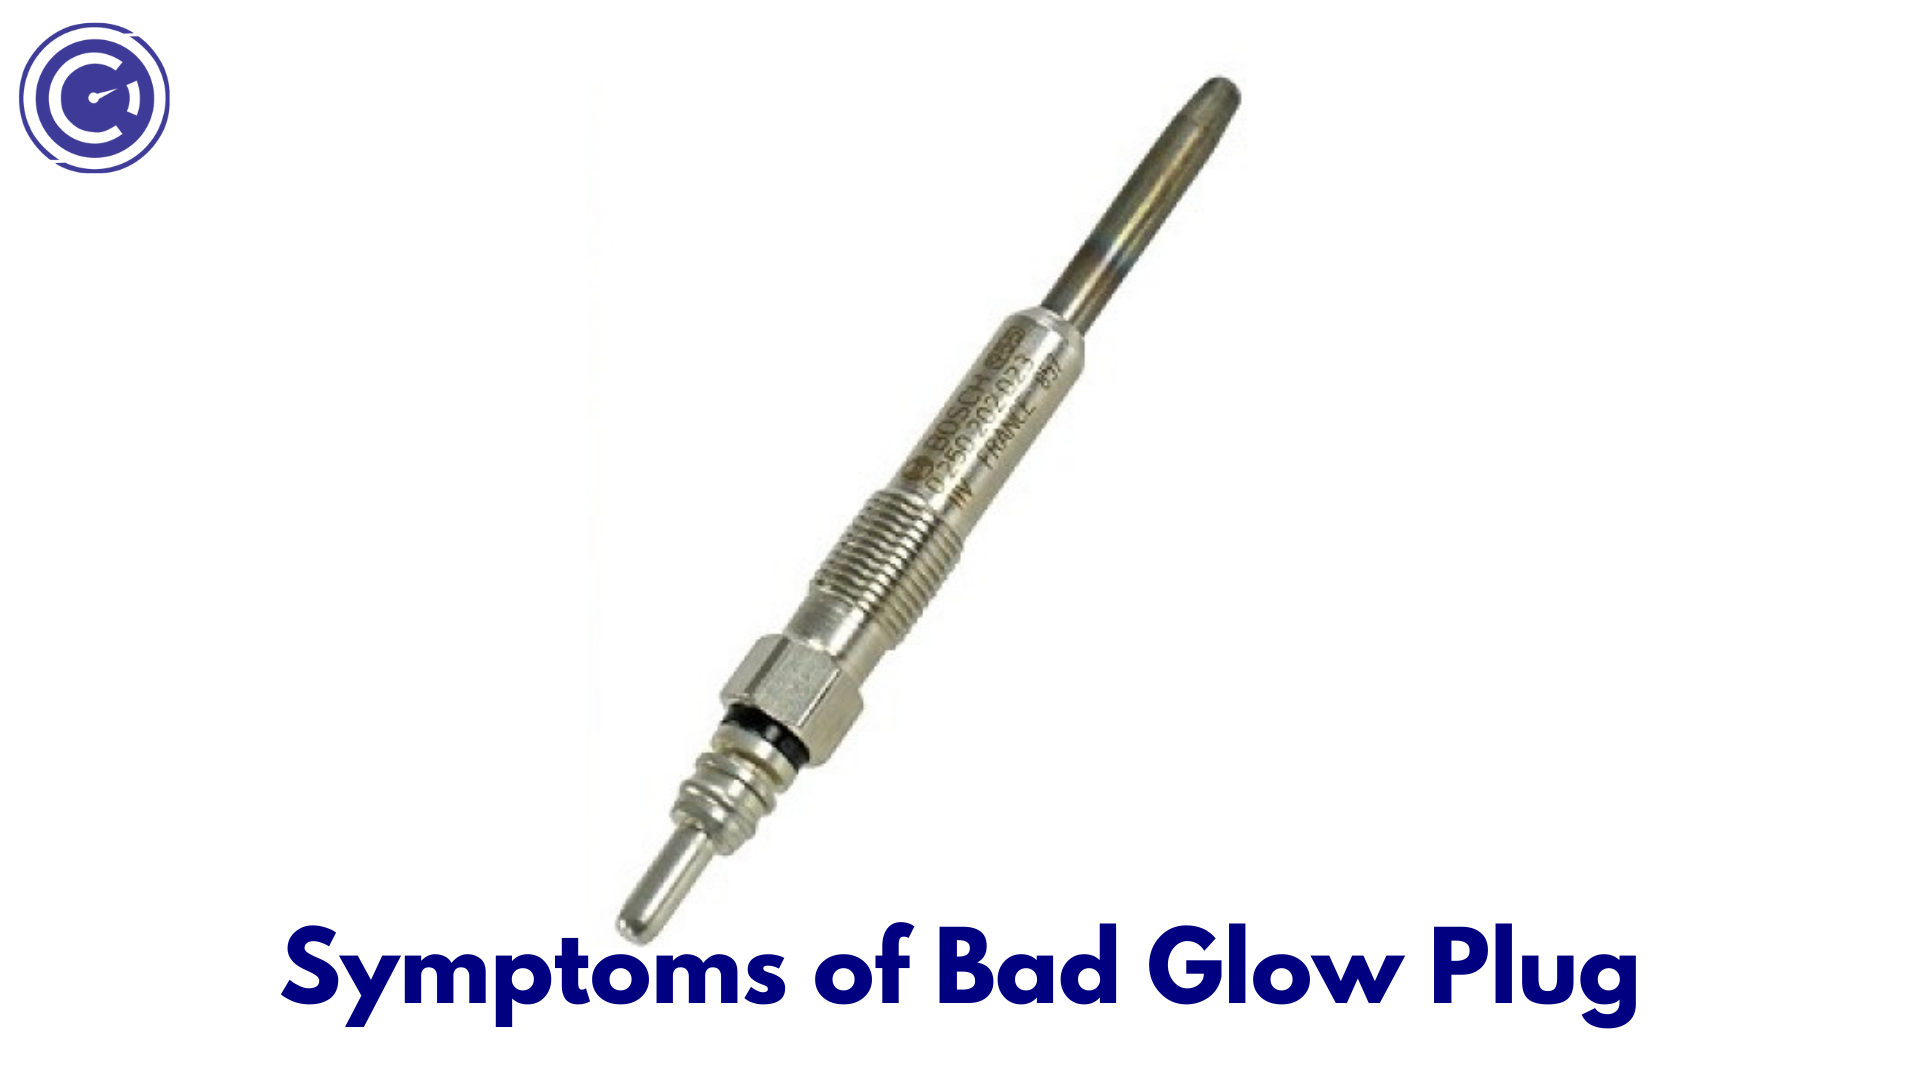 Symptoms of Bad Glow Plug